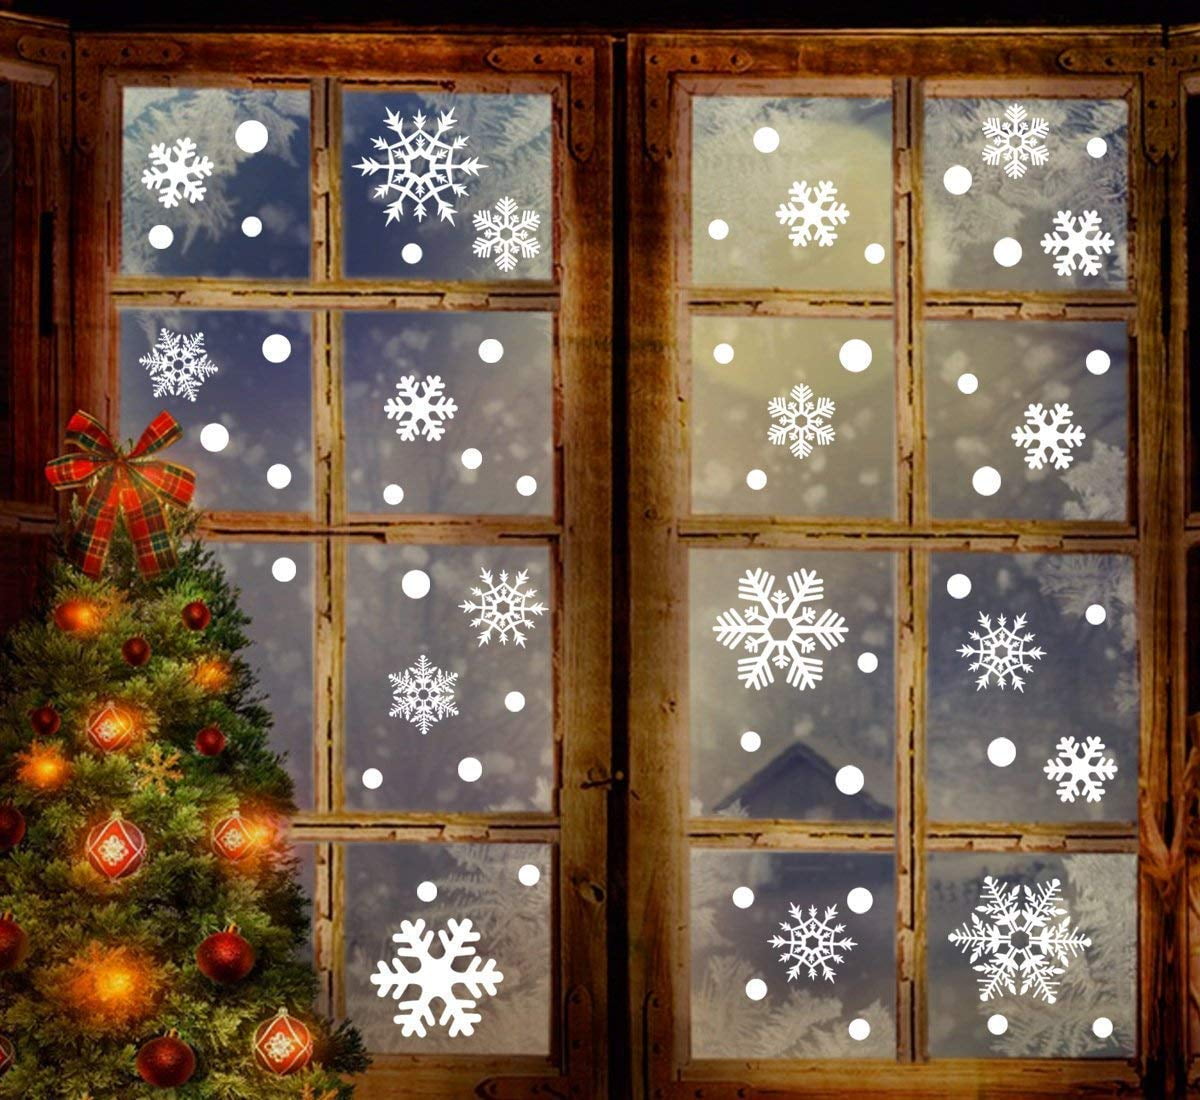 Select Theme Christmas Holiday Metallic 3D Window Stickers Large 